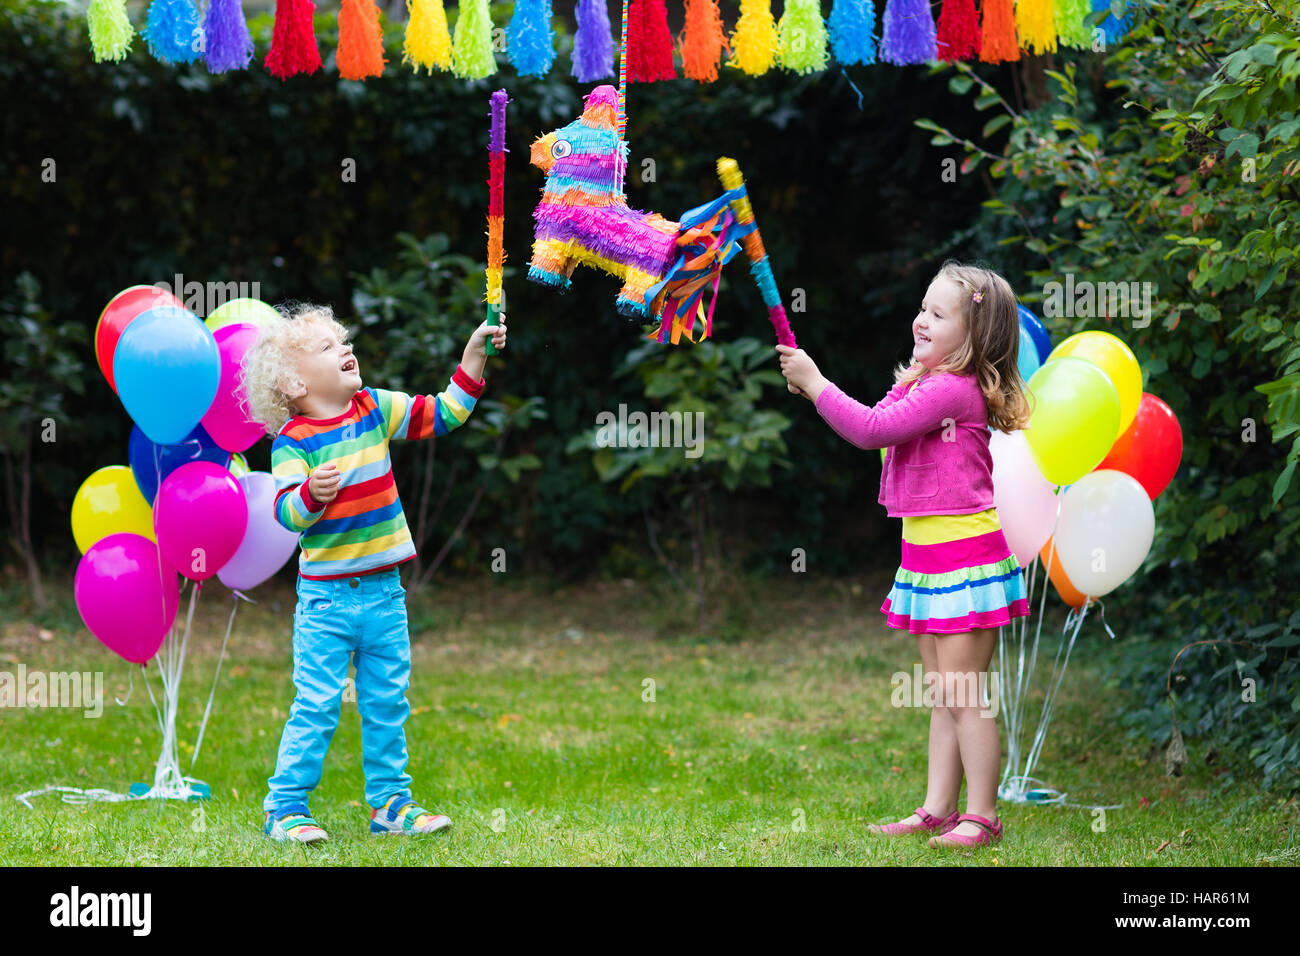 Familia hispana celebra cumpleaños infantil con piñata Fotografía de stock  - Alamy